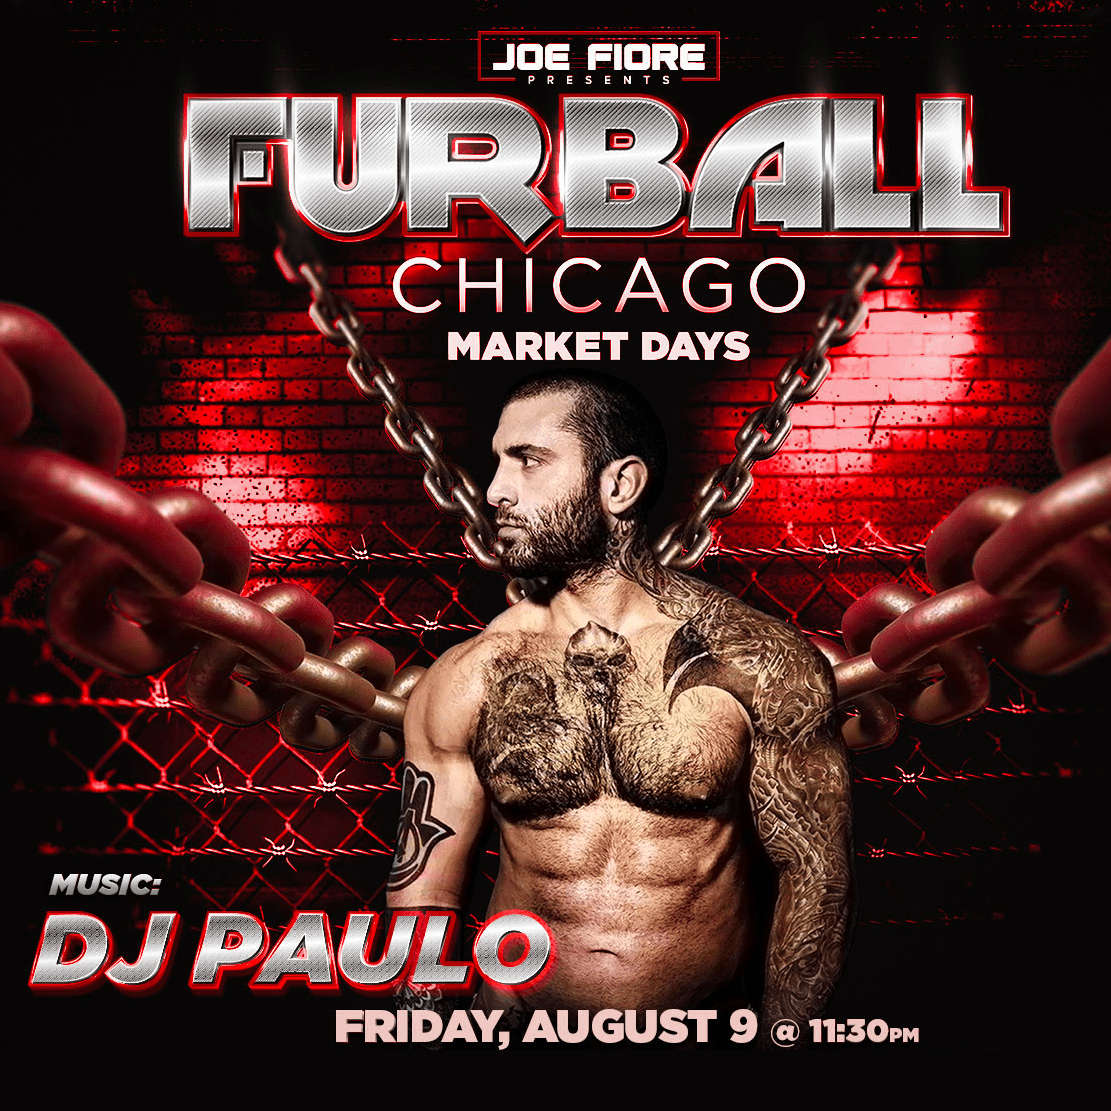 Furball: Market Days Chicago